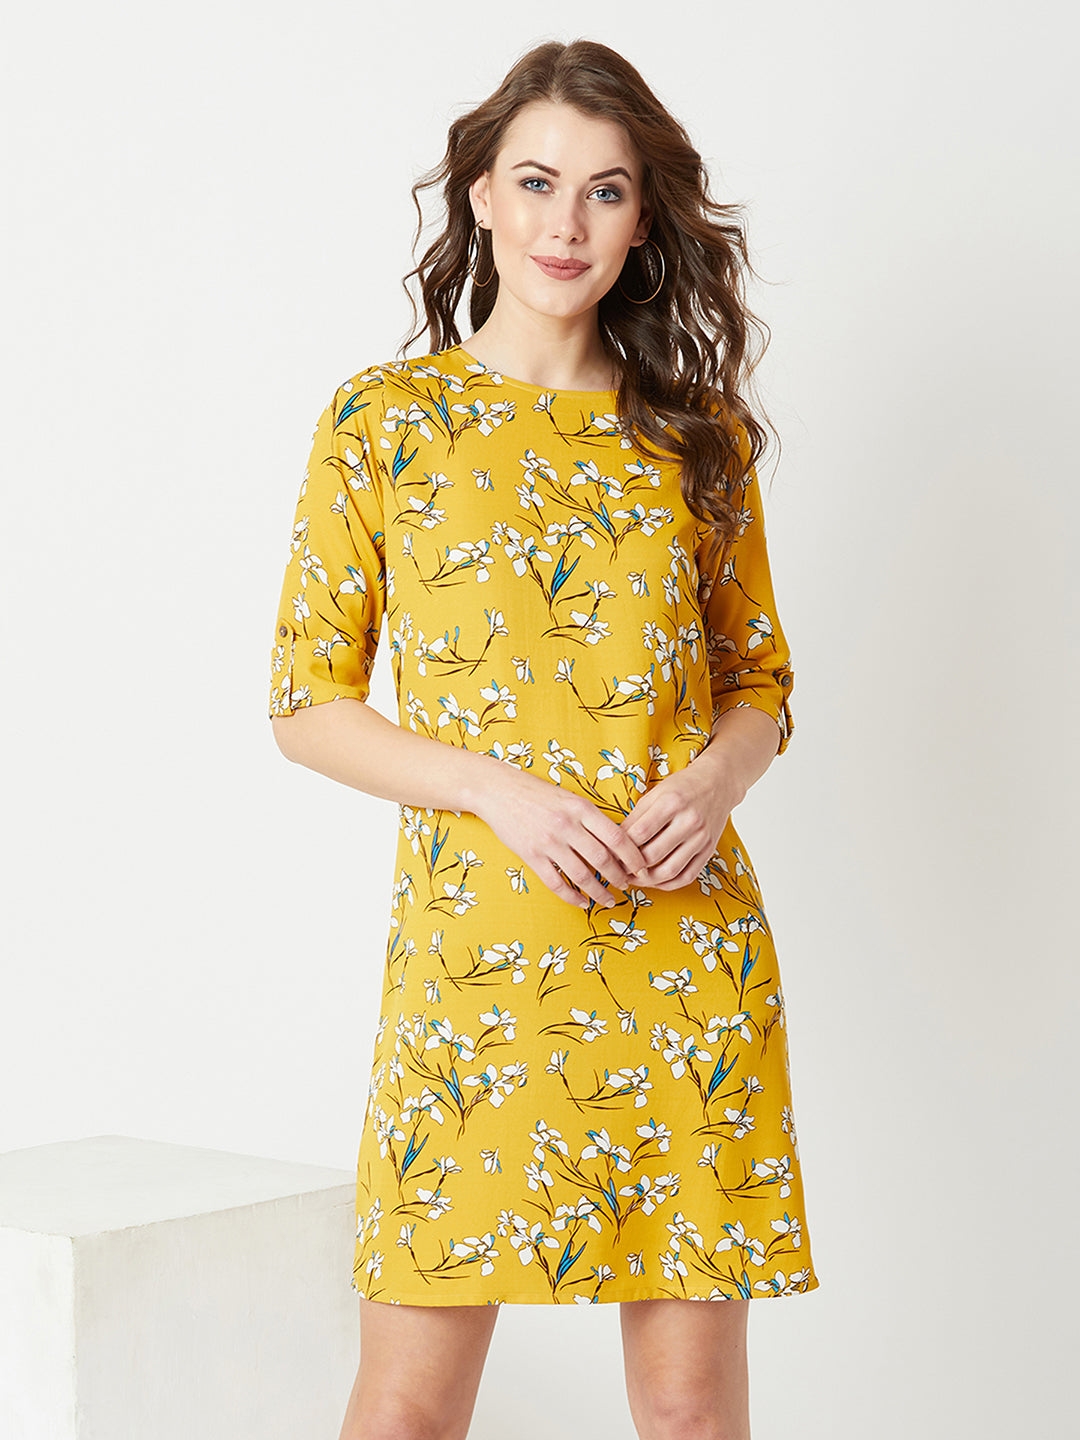 Women's Yellow Crepe Casualwear Shift Dress